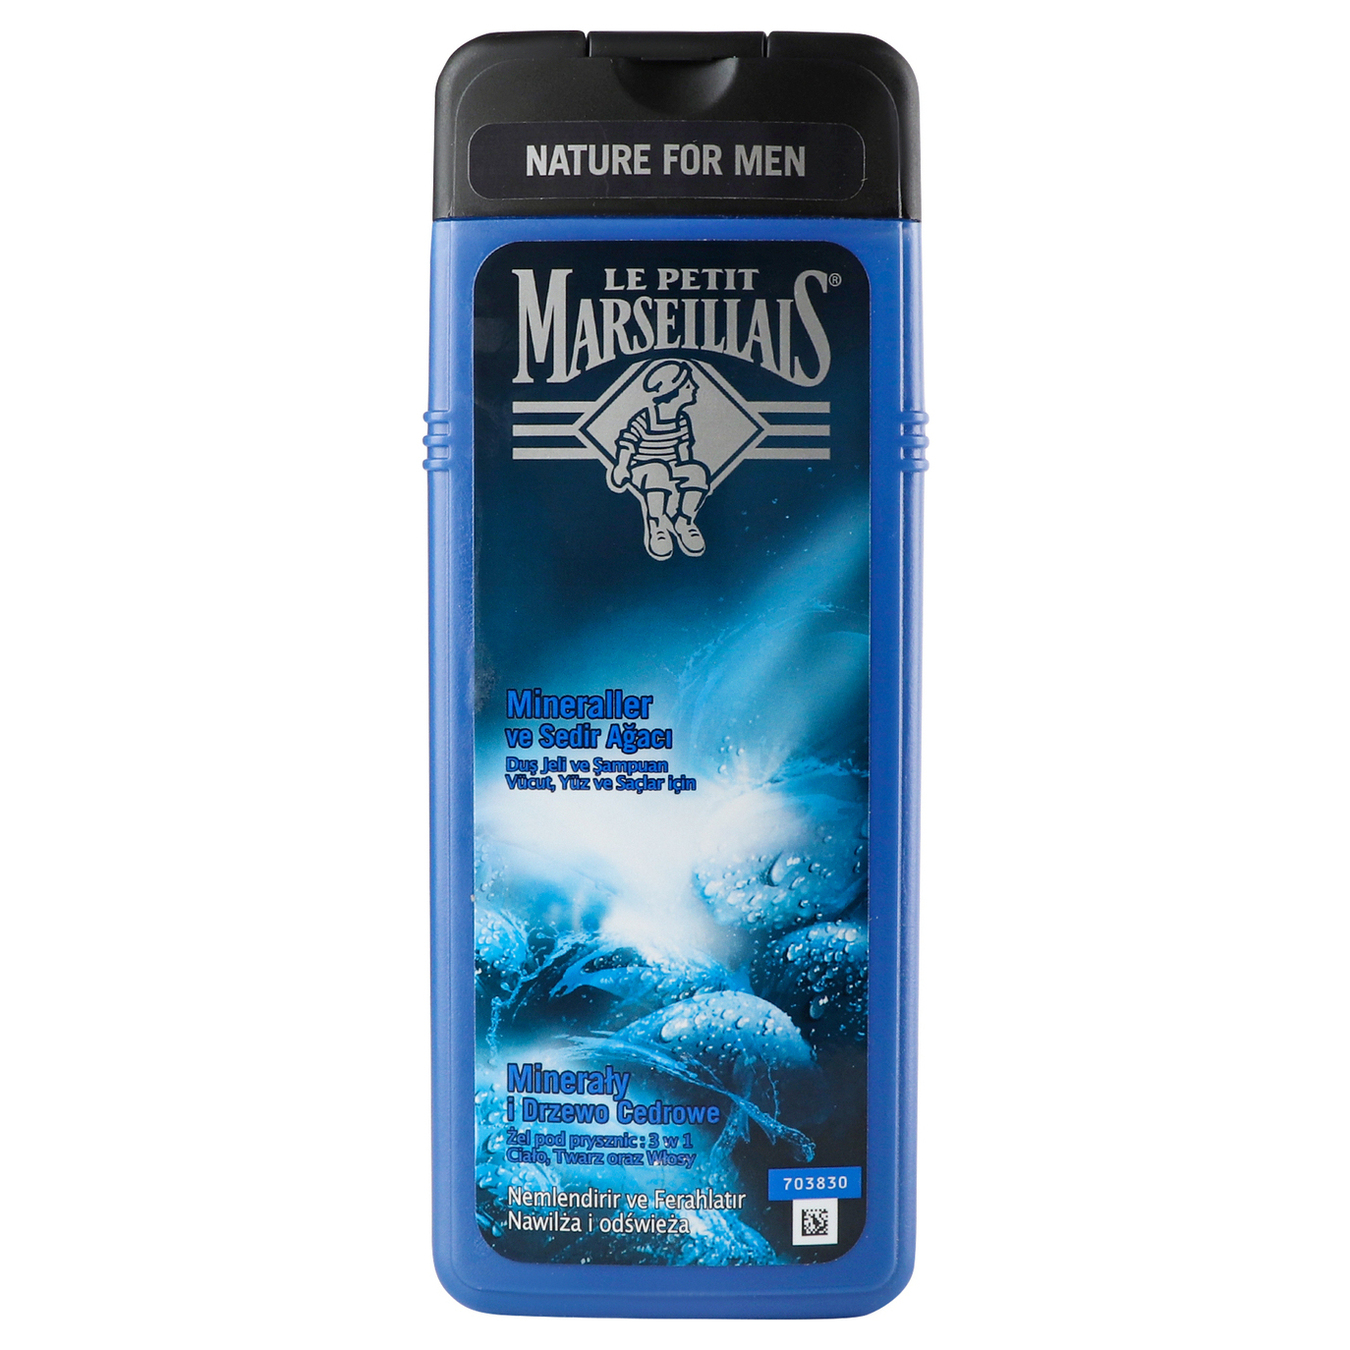 Gel-shampoo Le Petit Marseillais for men cedar and minerals 3 in 1 400ml